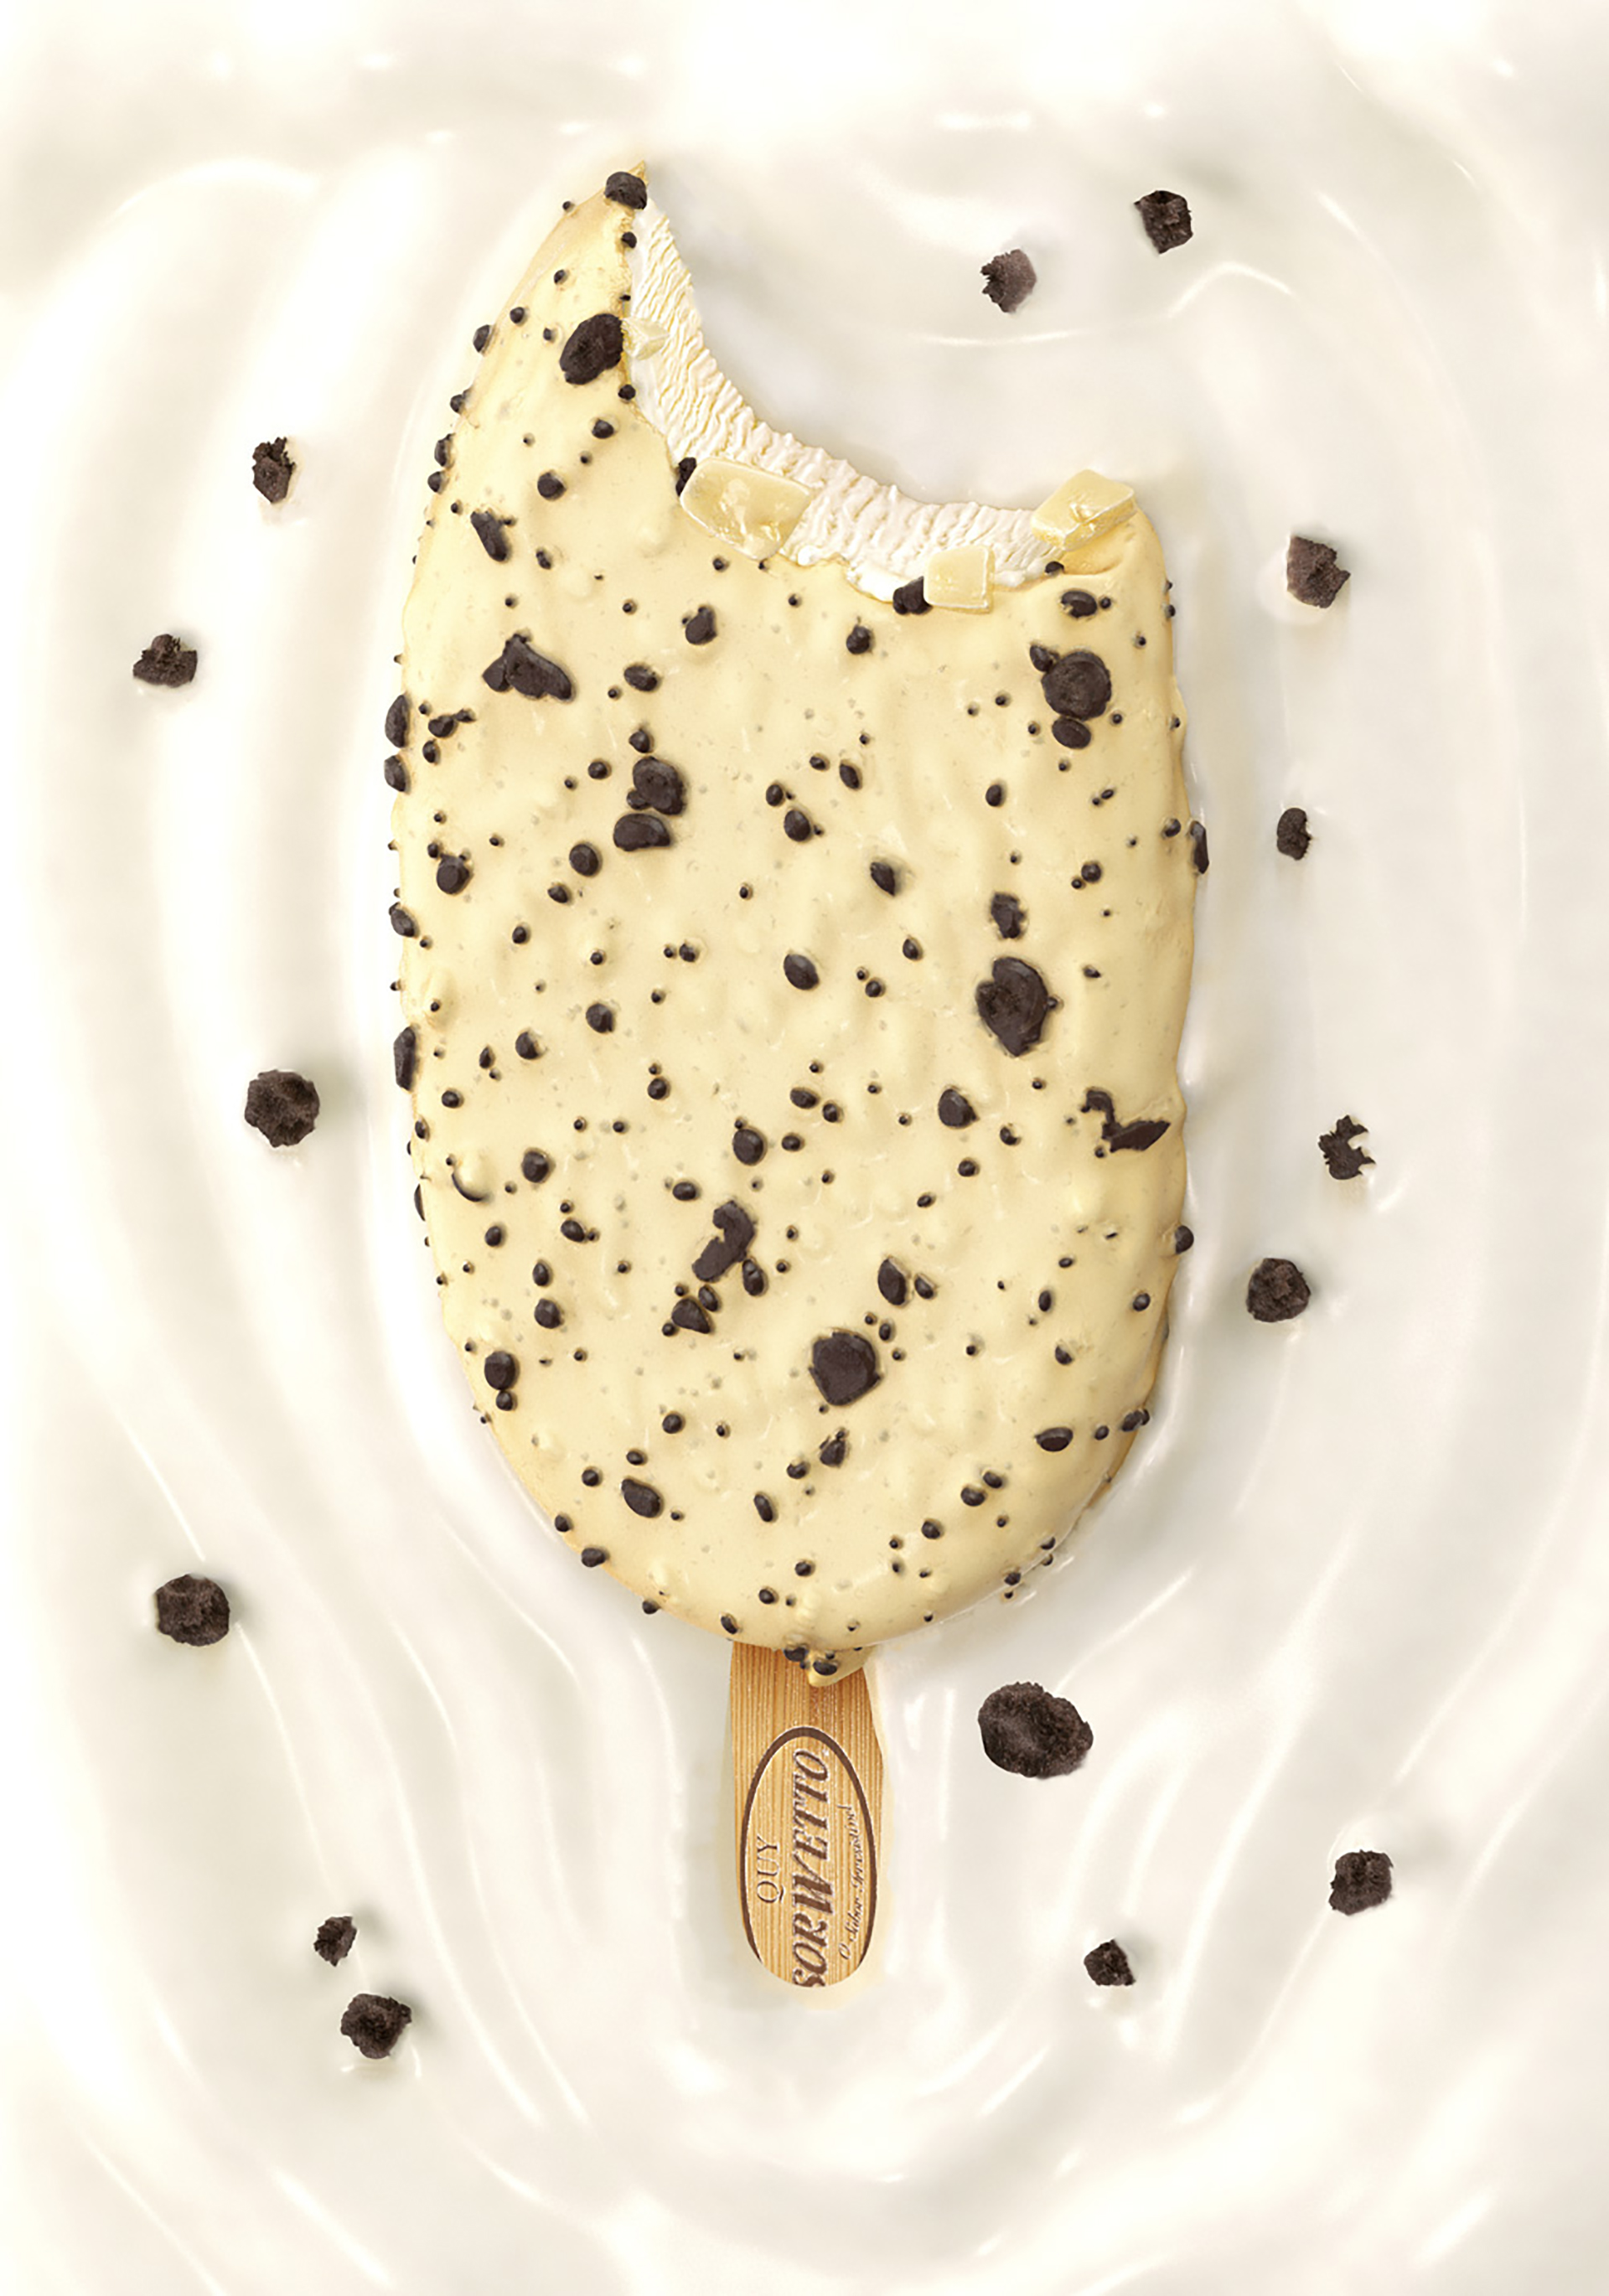 cg illustrated white chocolate ice cream illustration